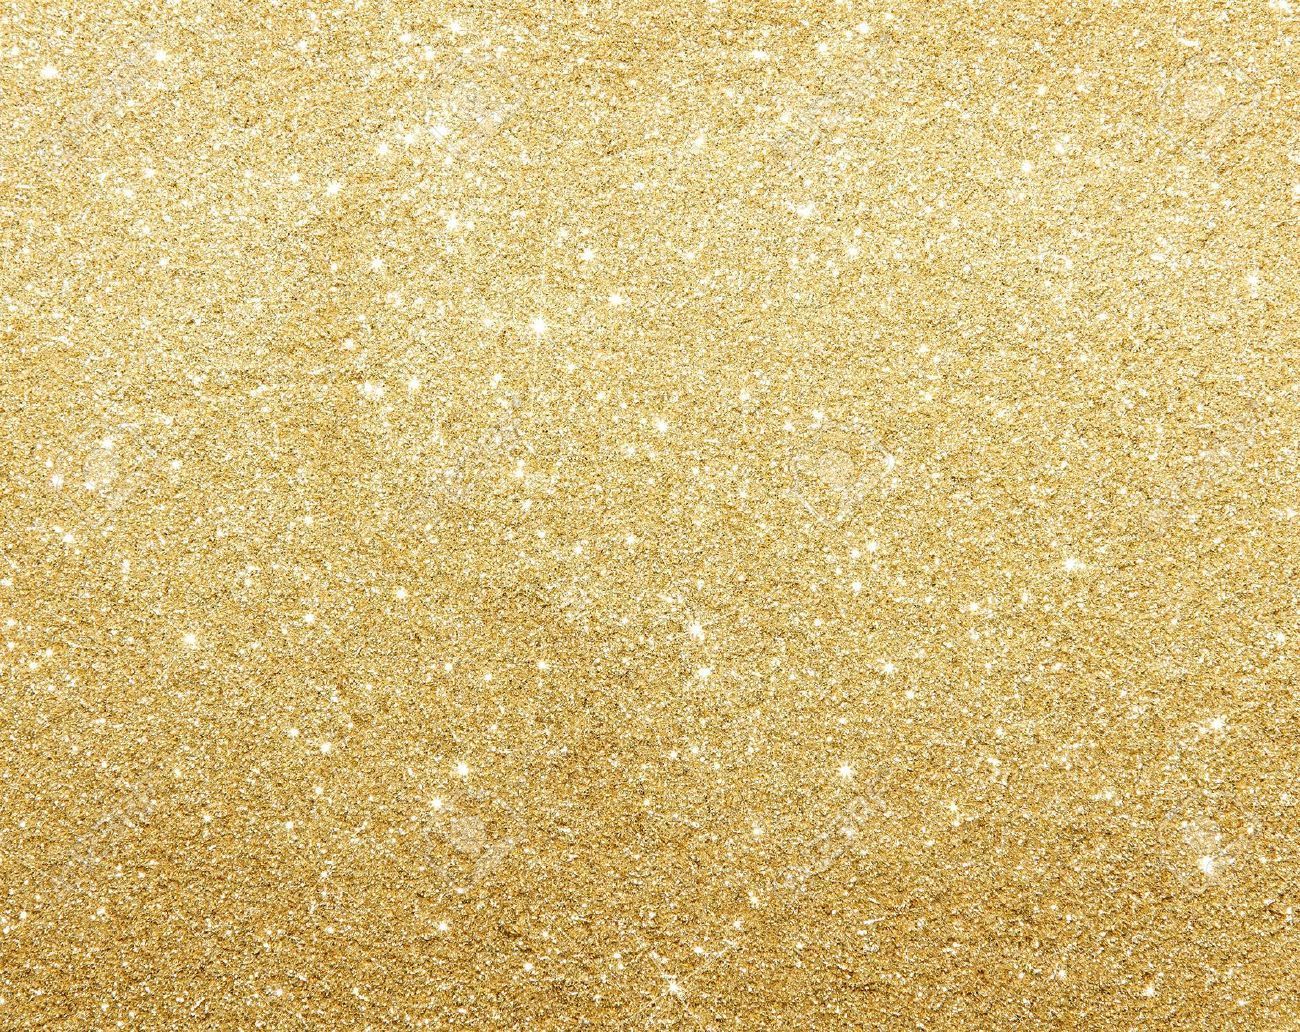 9970428 Glamour Gold Sparkling Background Stock Photo (JPEG Image, 1300 × 1032 Pixels). Gold Glitter Background, Glitter Background, Gold Background